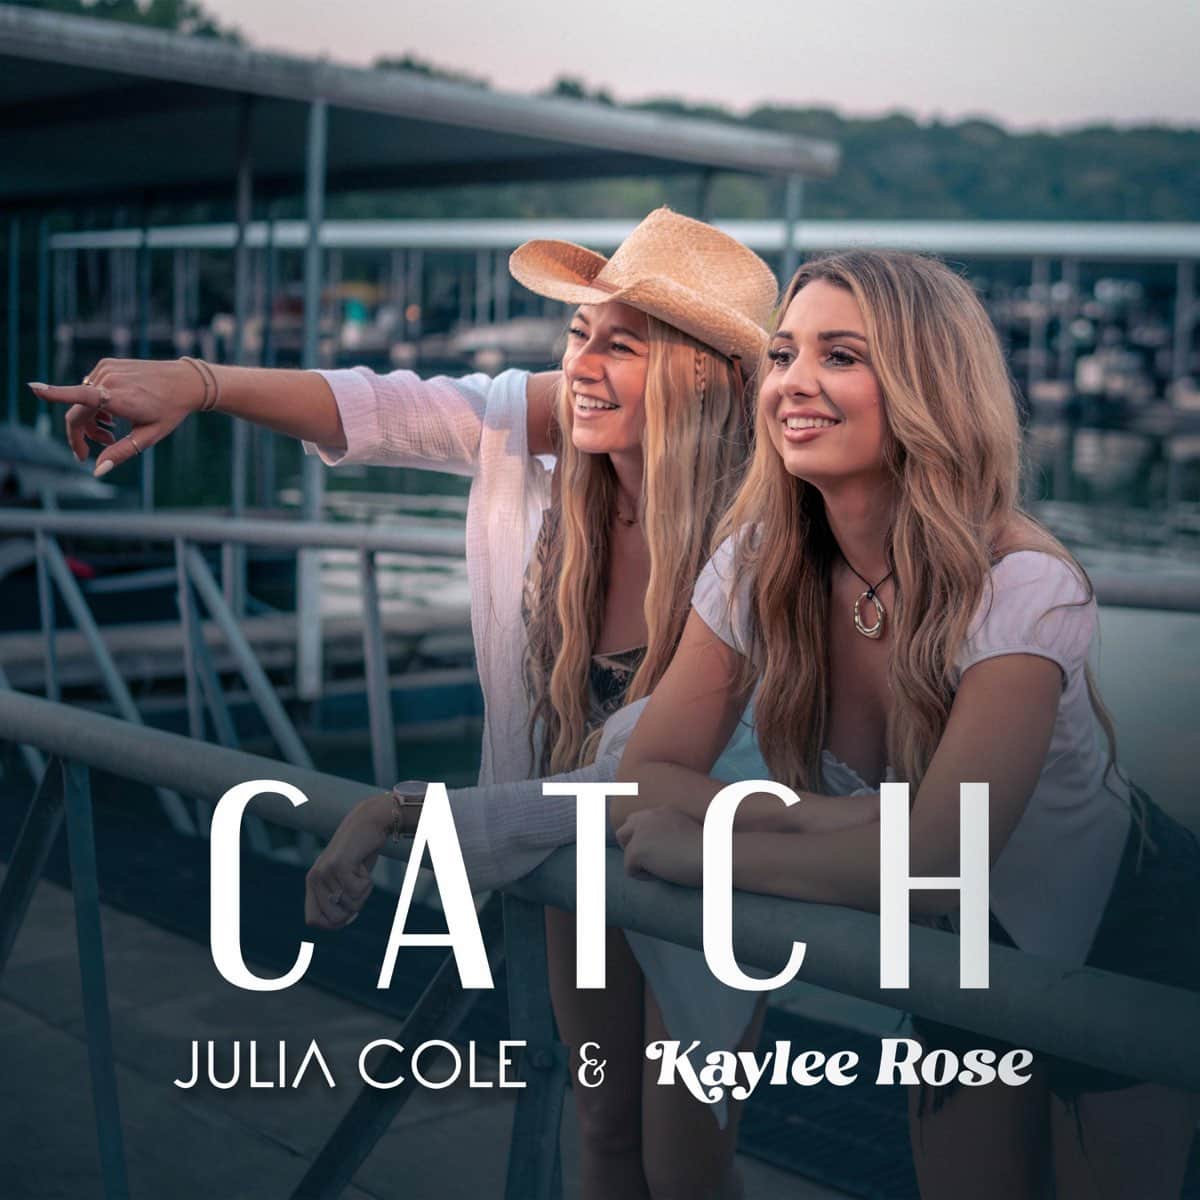 Julia Cole & Kaylee Rose Country-Song “Catch” veröffentlicht